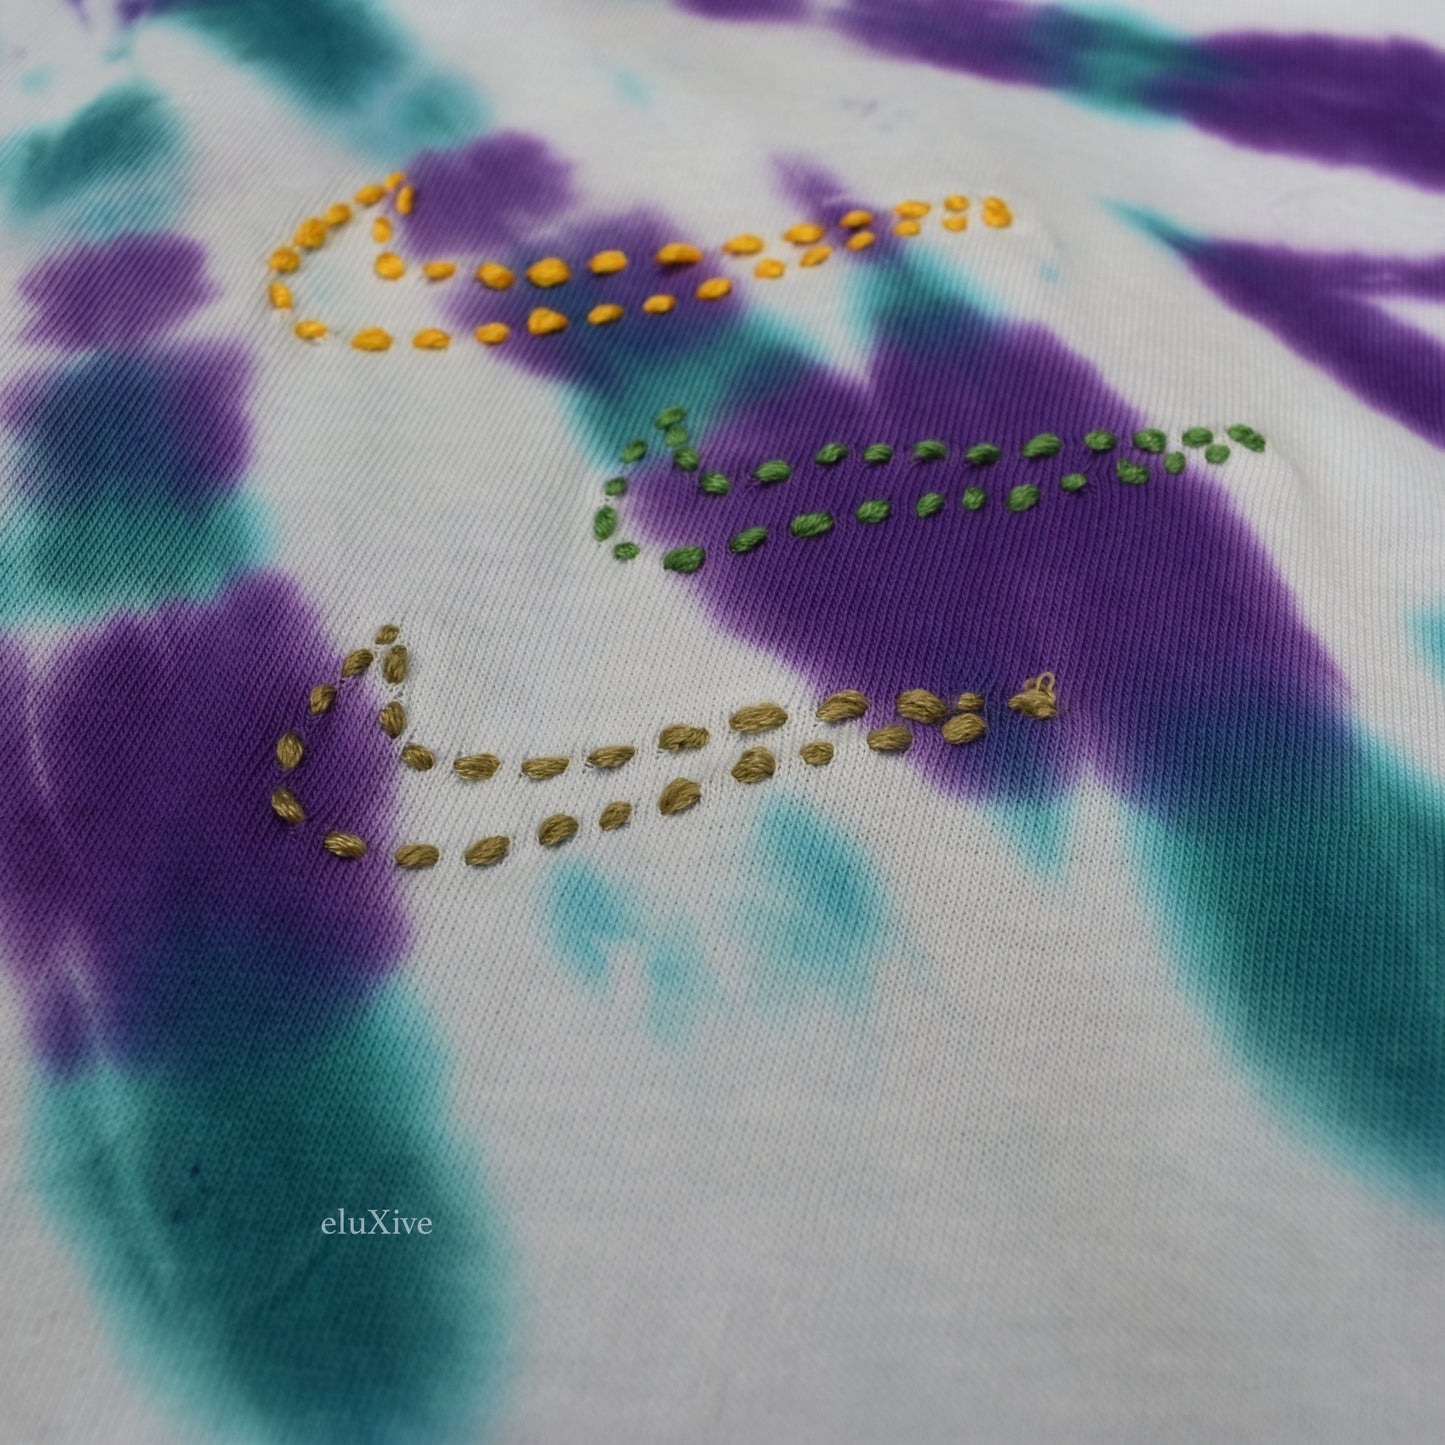 Nike - Tie-Dye Hand Embroidered Swoosh Logo T-Shirt